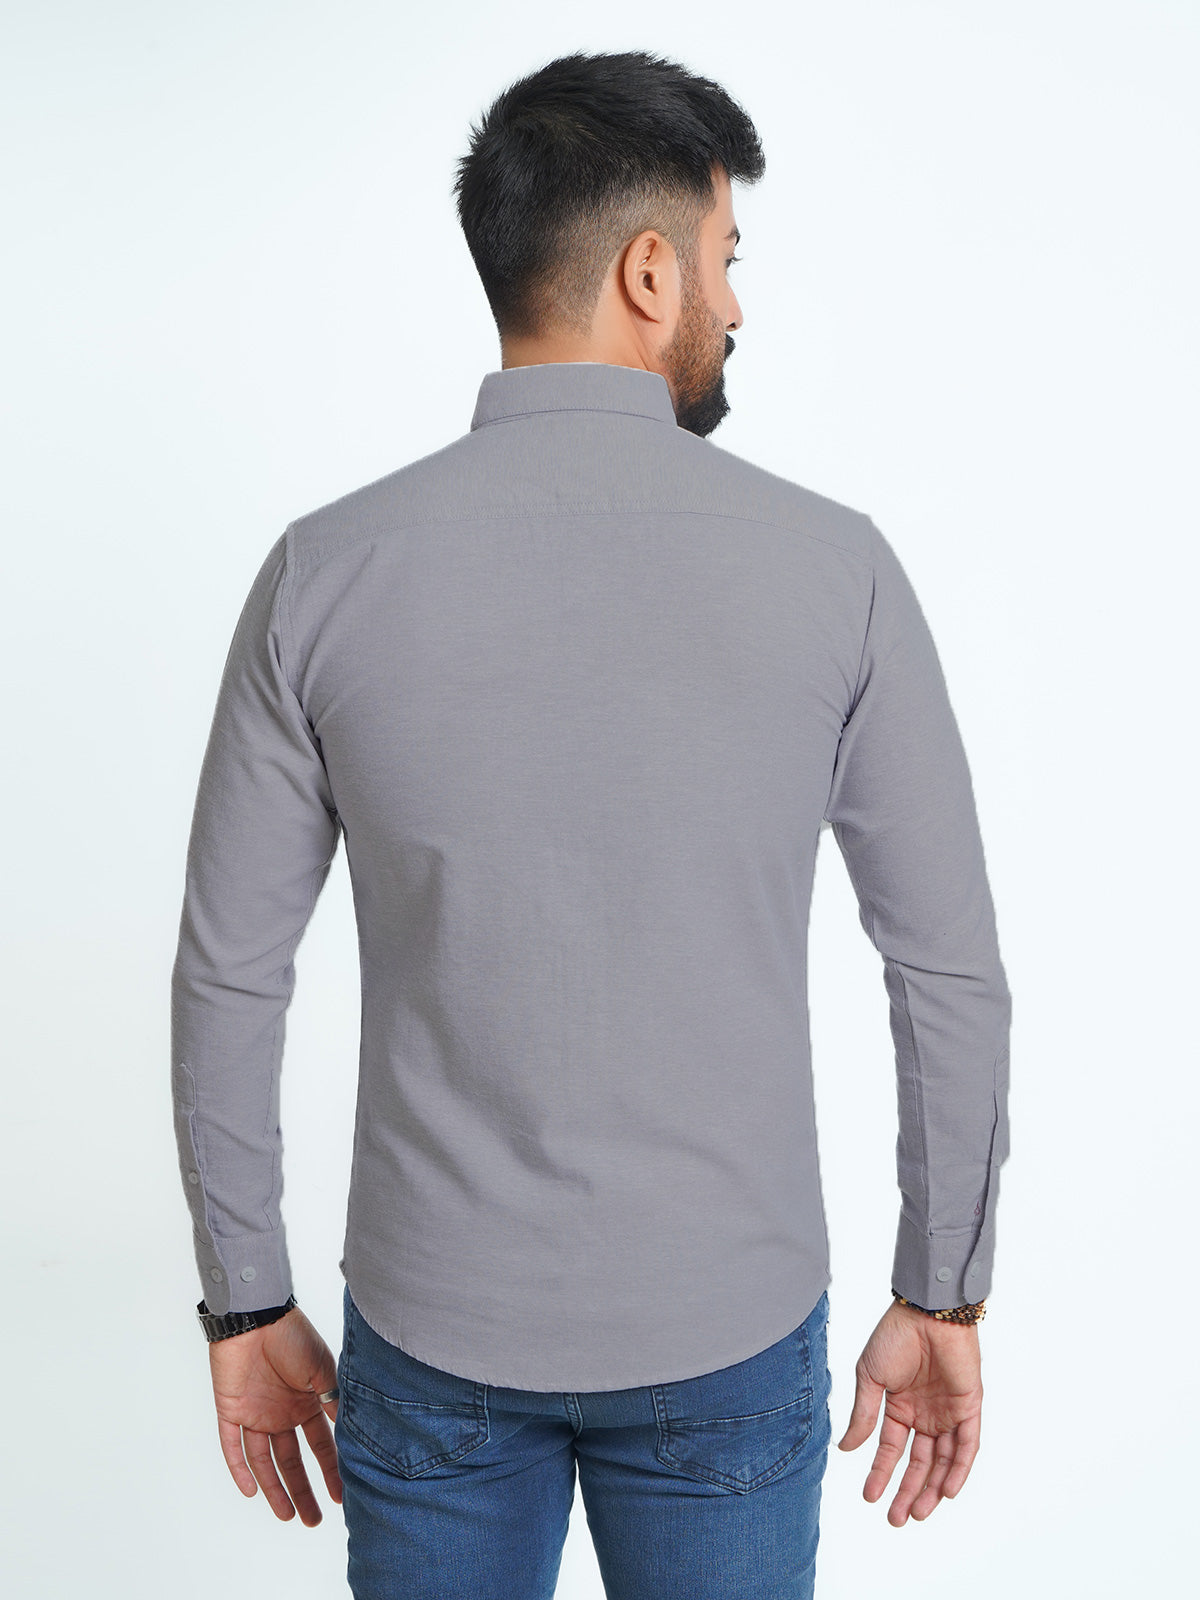 Grey Self Button Down Casual Shirt (CSB-137)